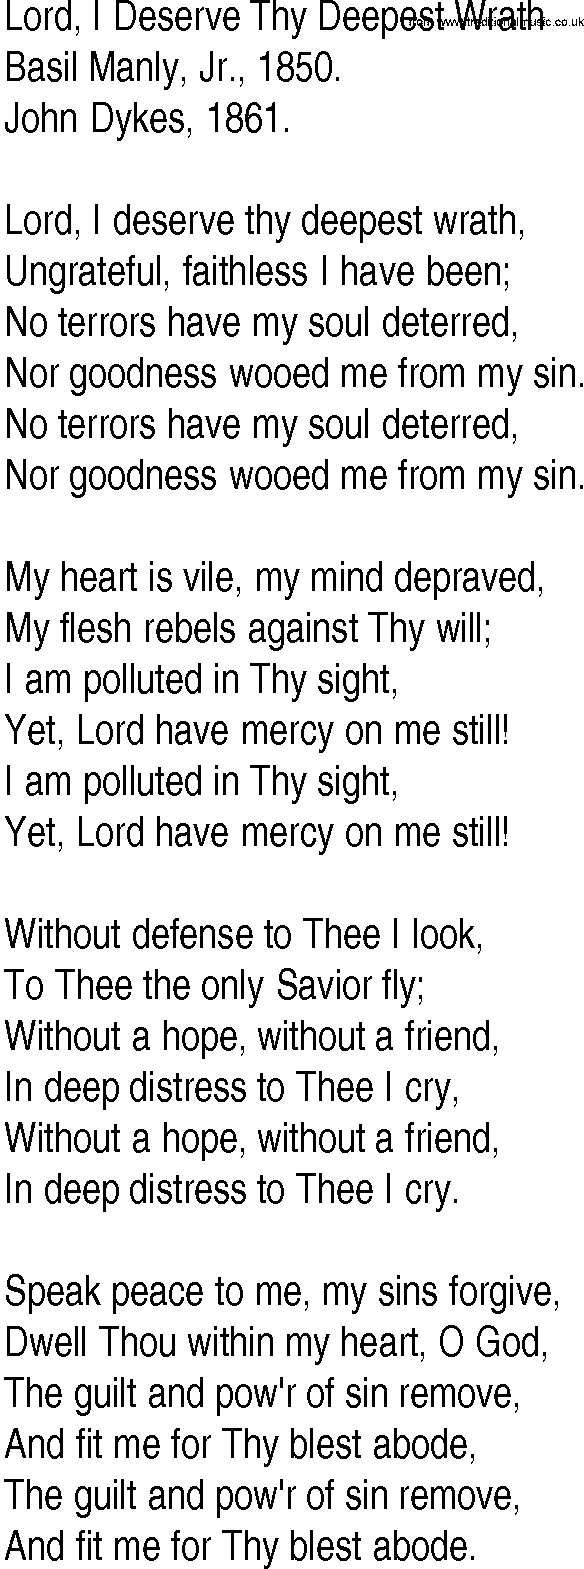 Hymn and Gospel Song: Lord, I Deserve Thy Deepest Wrath by Basil Manly Jr lyrics